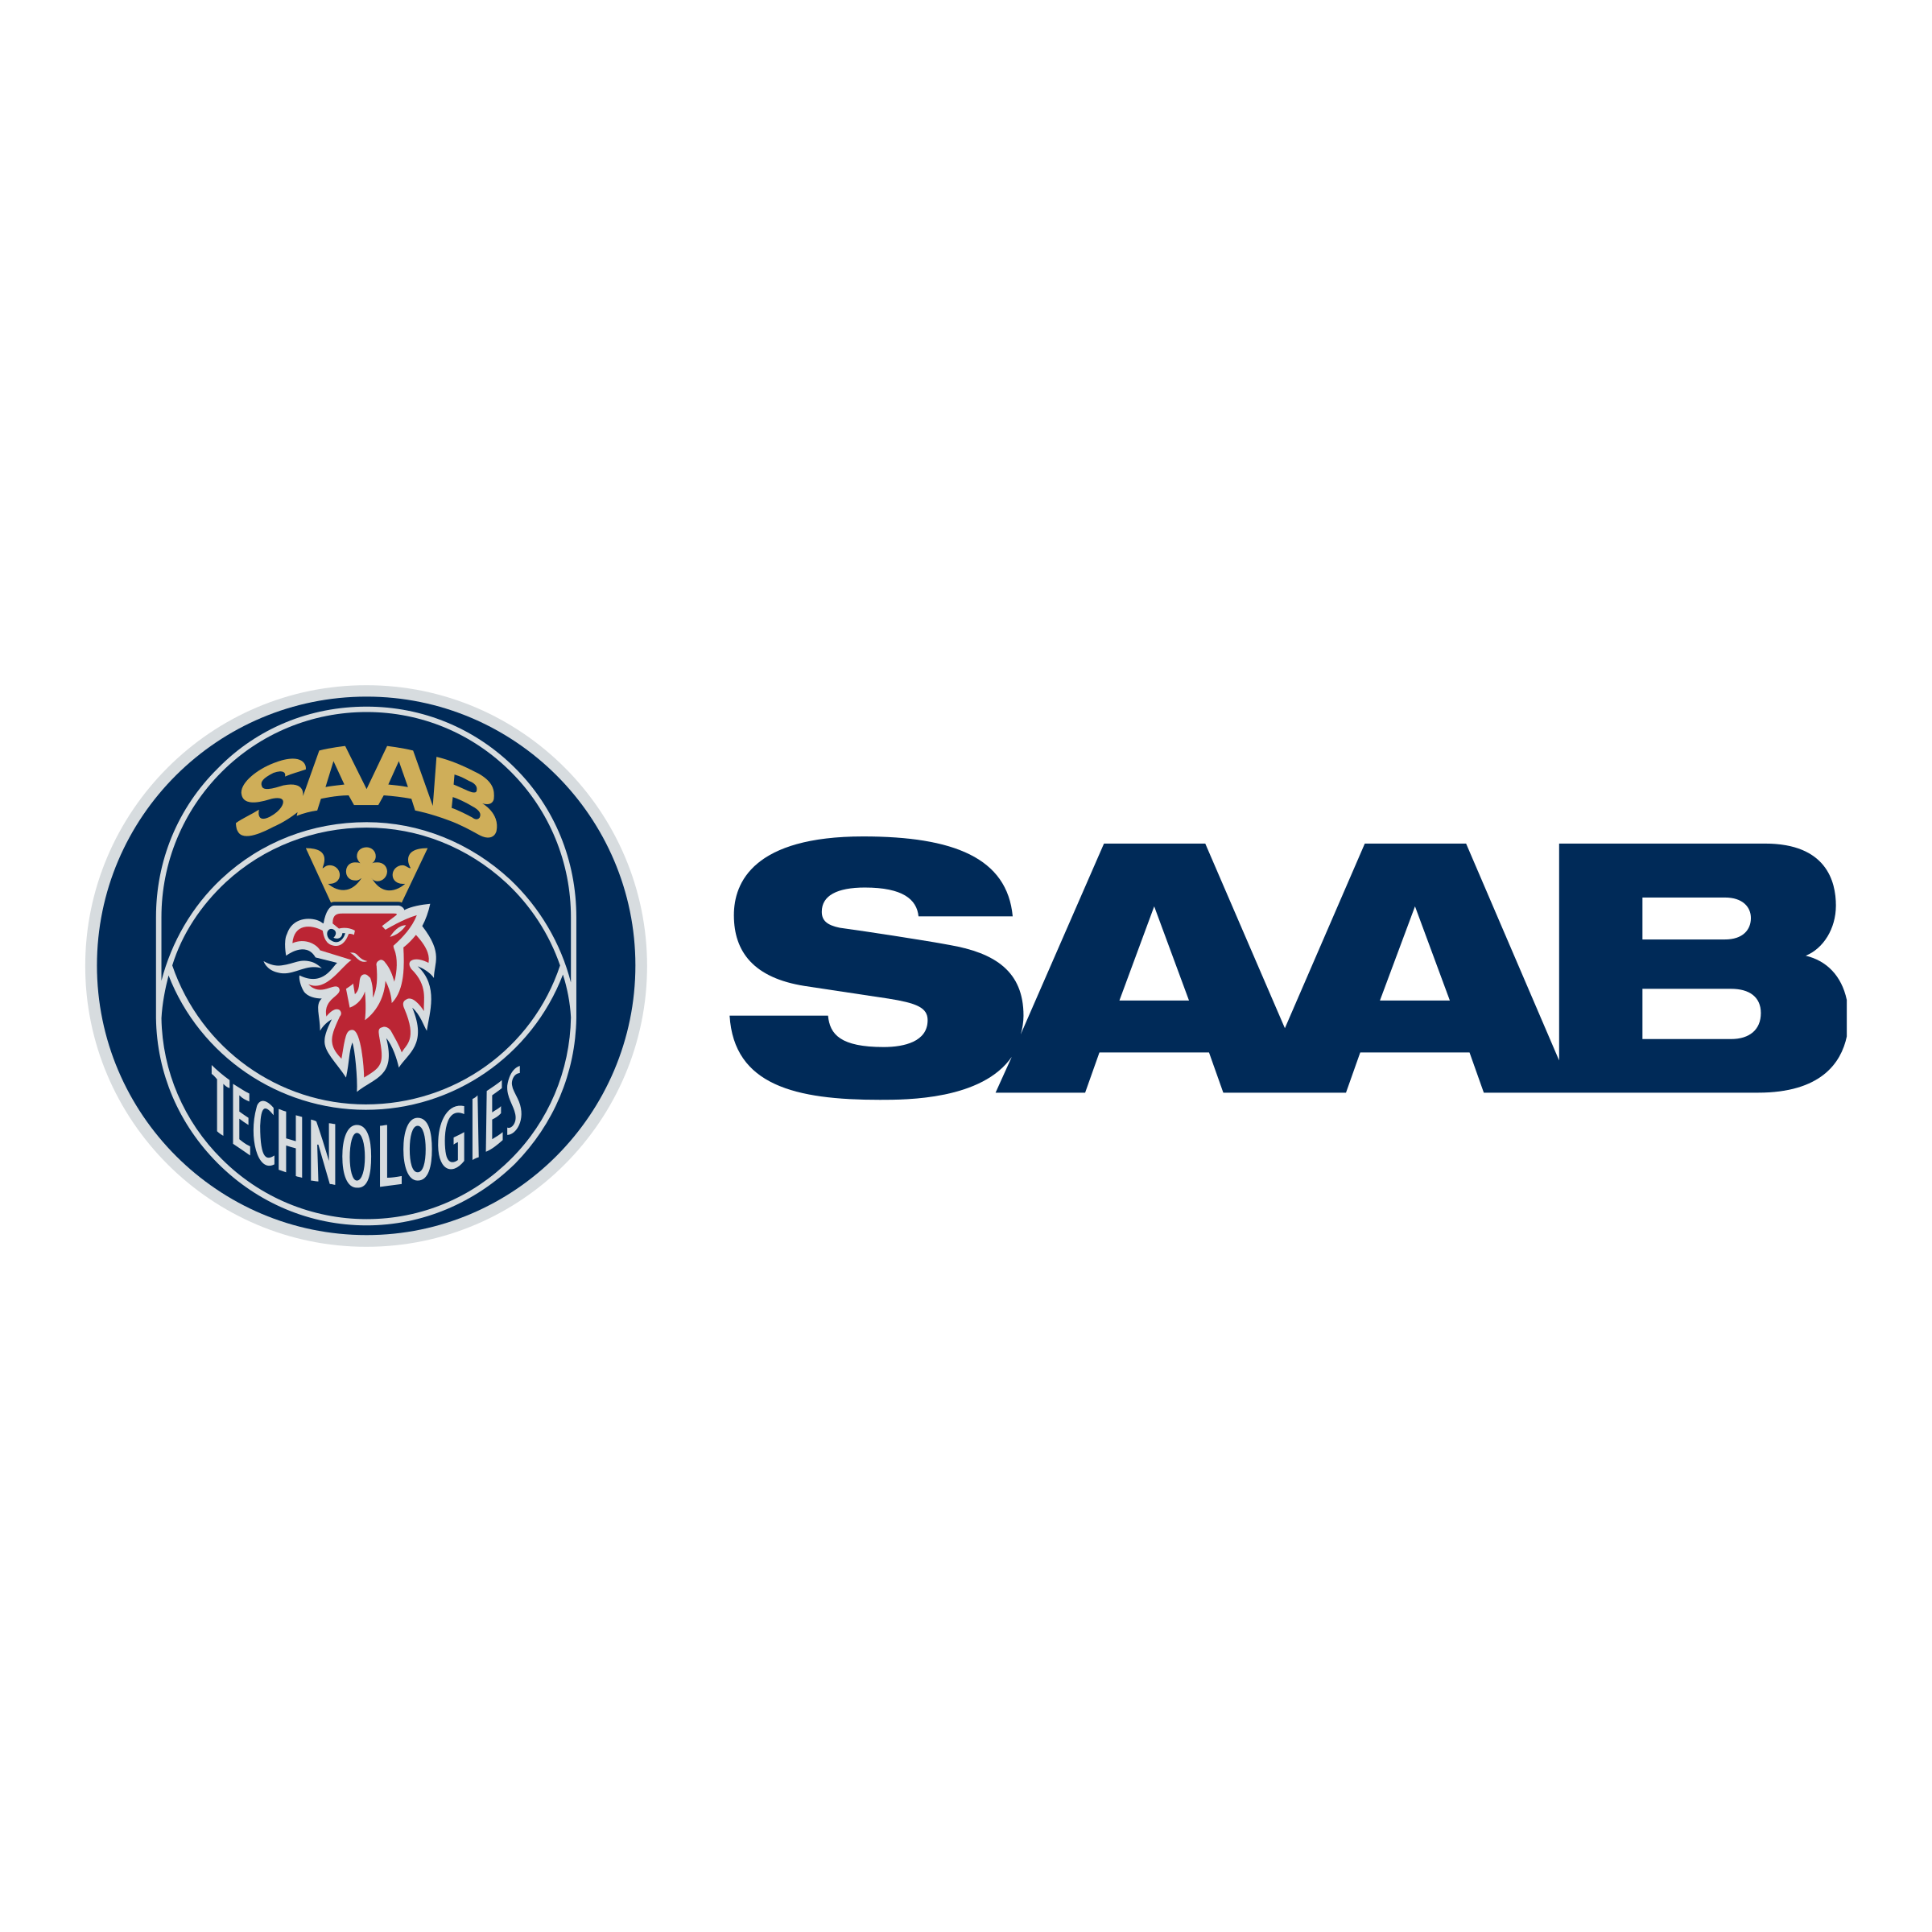 Saab Logo - SAAB Technologies Logo PNG Transparent & SVG Vector - Freebie Supply